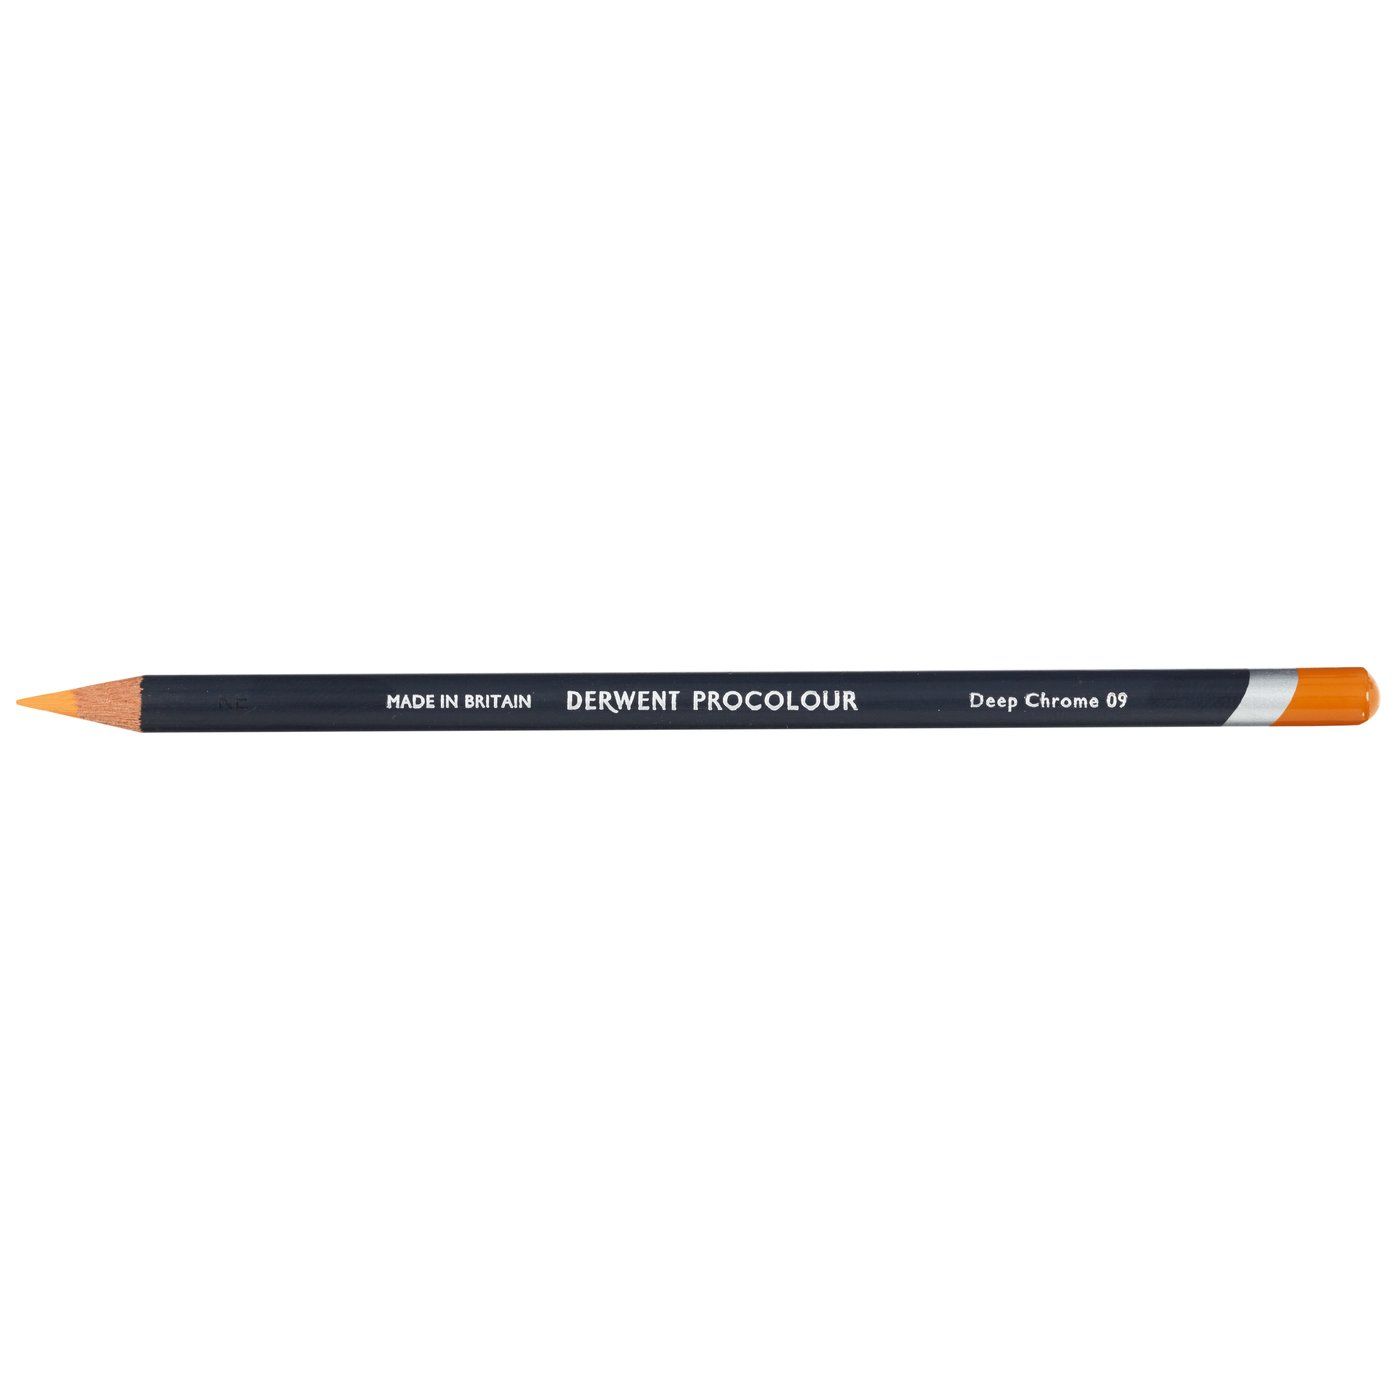 Derwent Procolour Pencil - 09 Deep Chrome Yellow